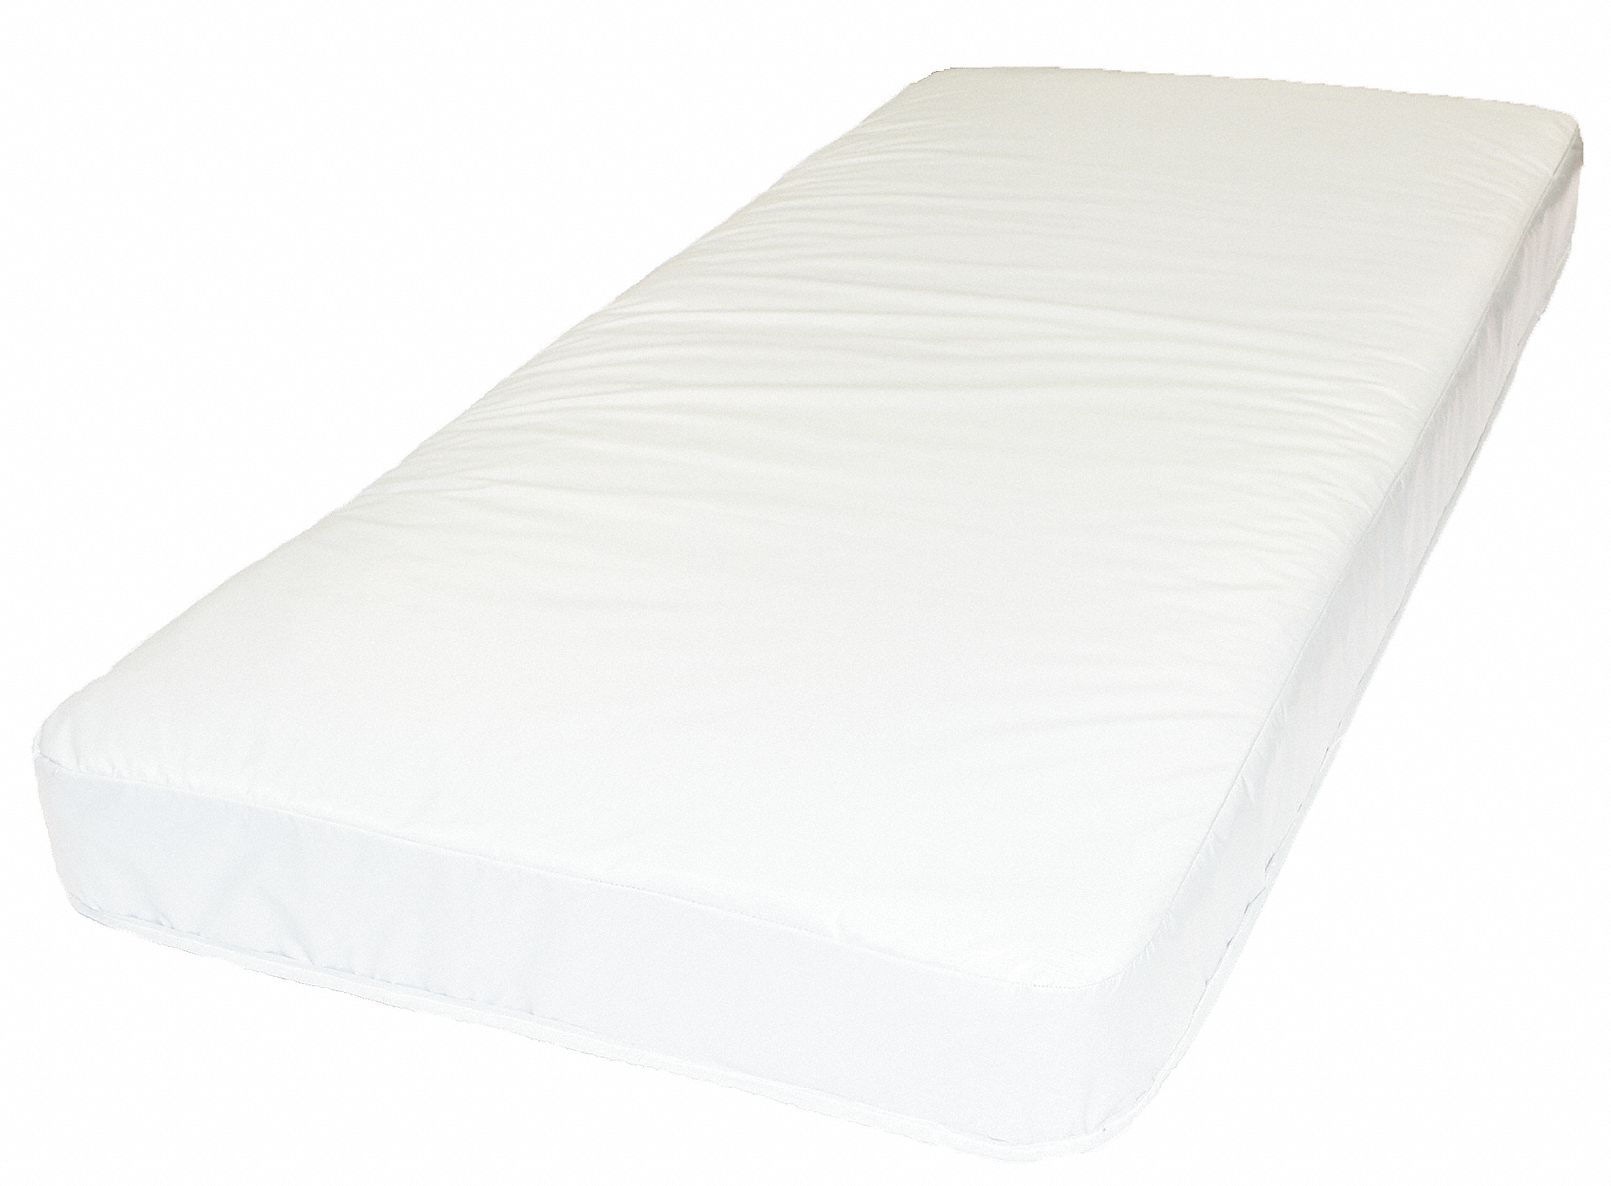 36 x 84 gel foam mattress